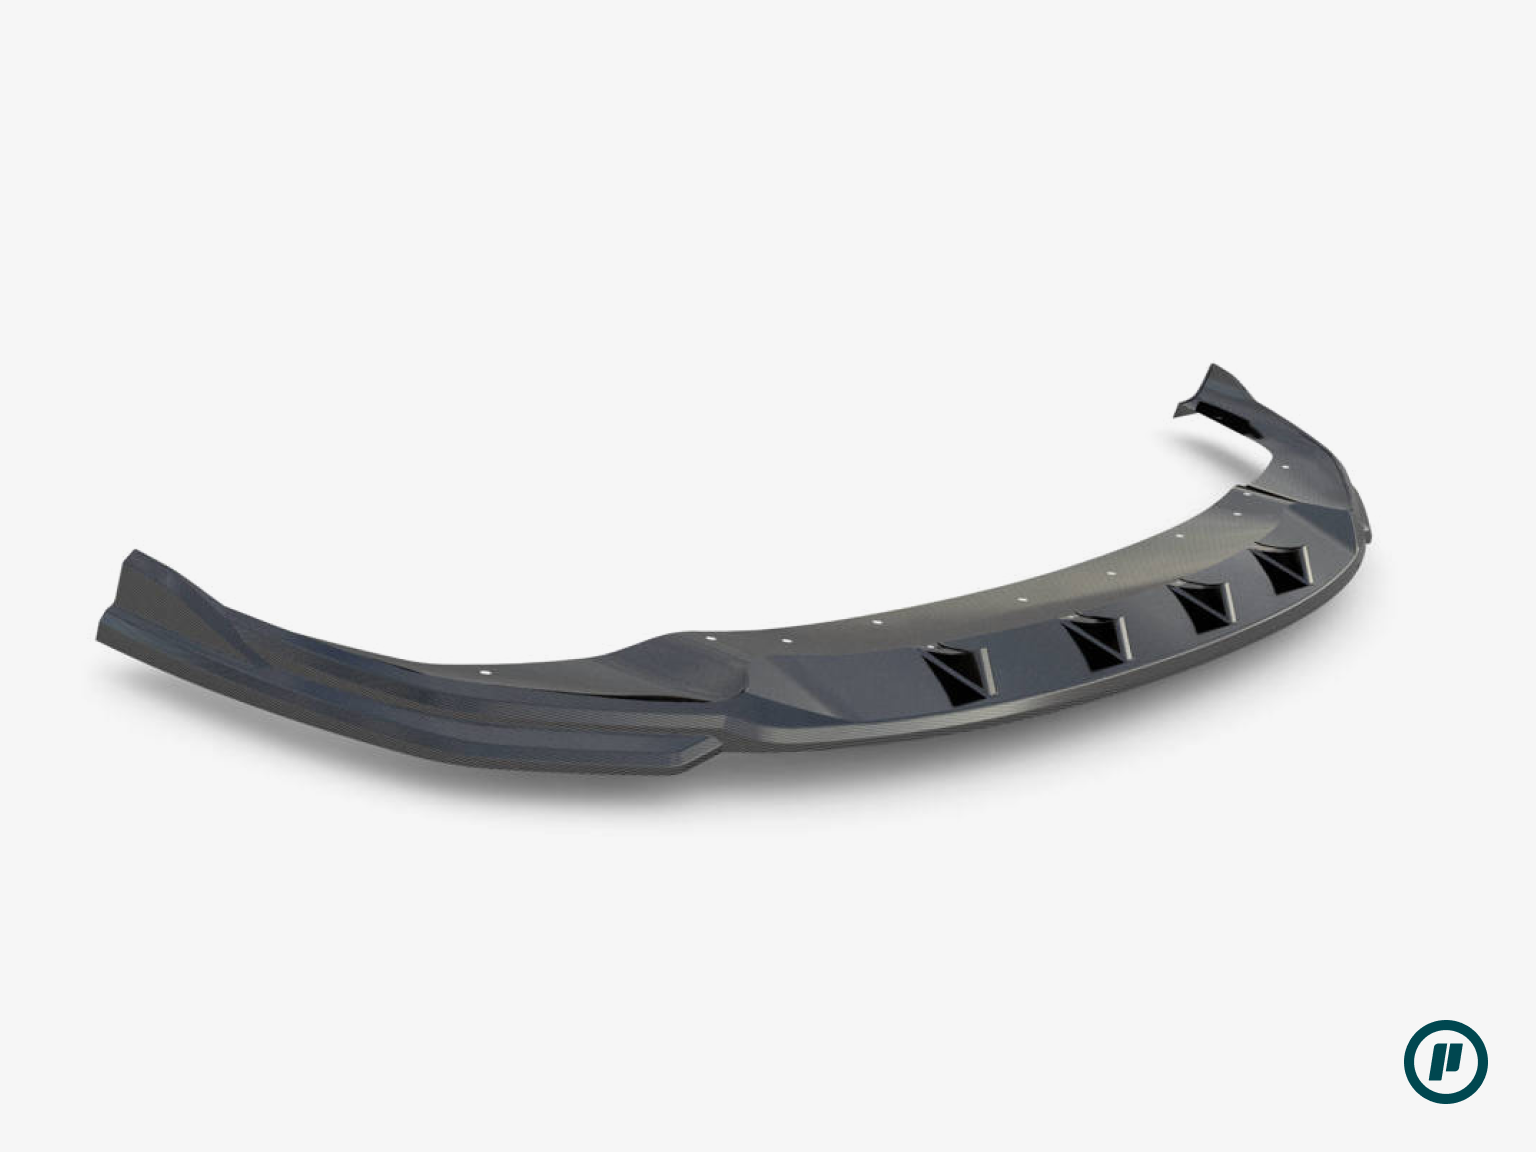 Maxton Design - Carbon Fiber Front Splitter for BMW M135i (F40 2019+)